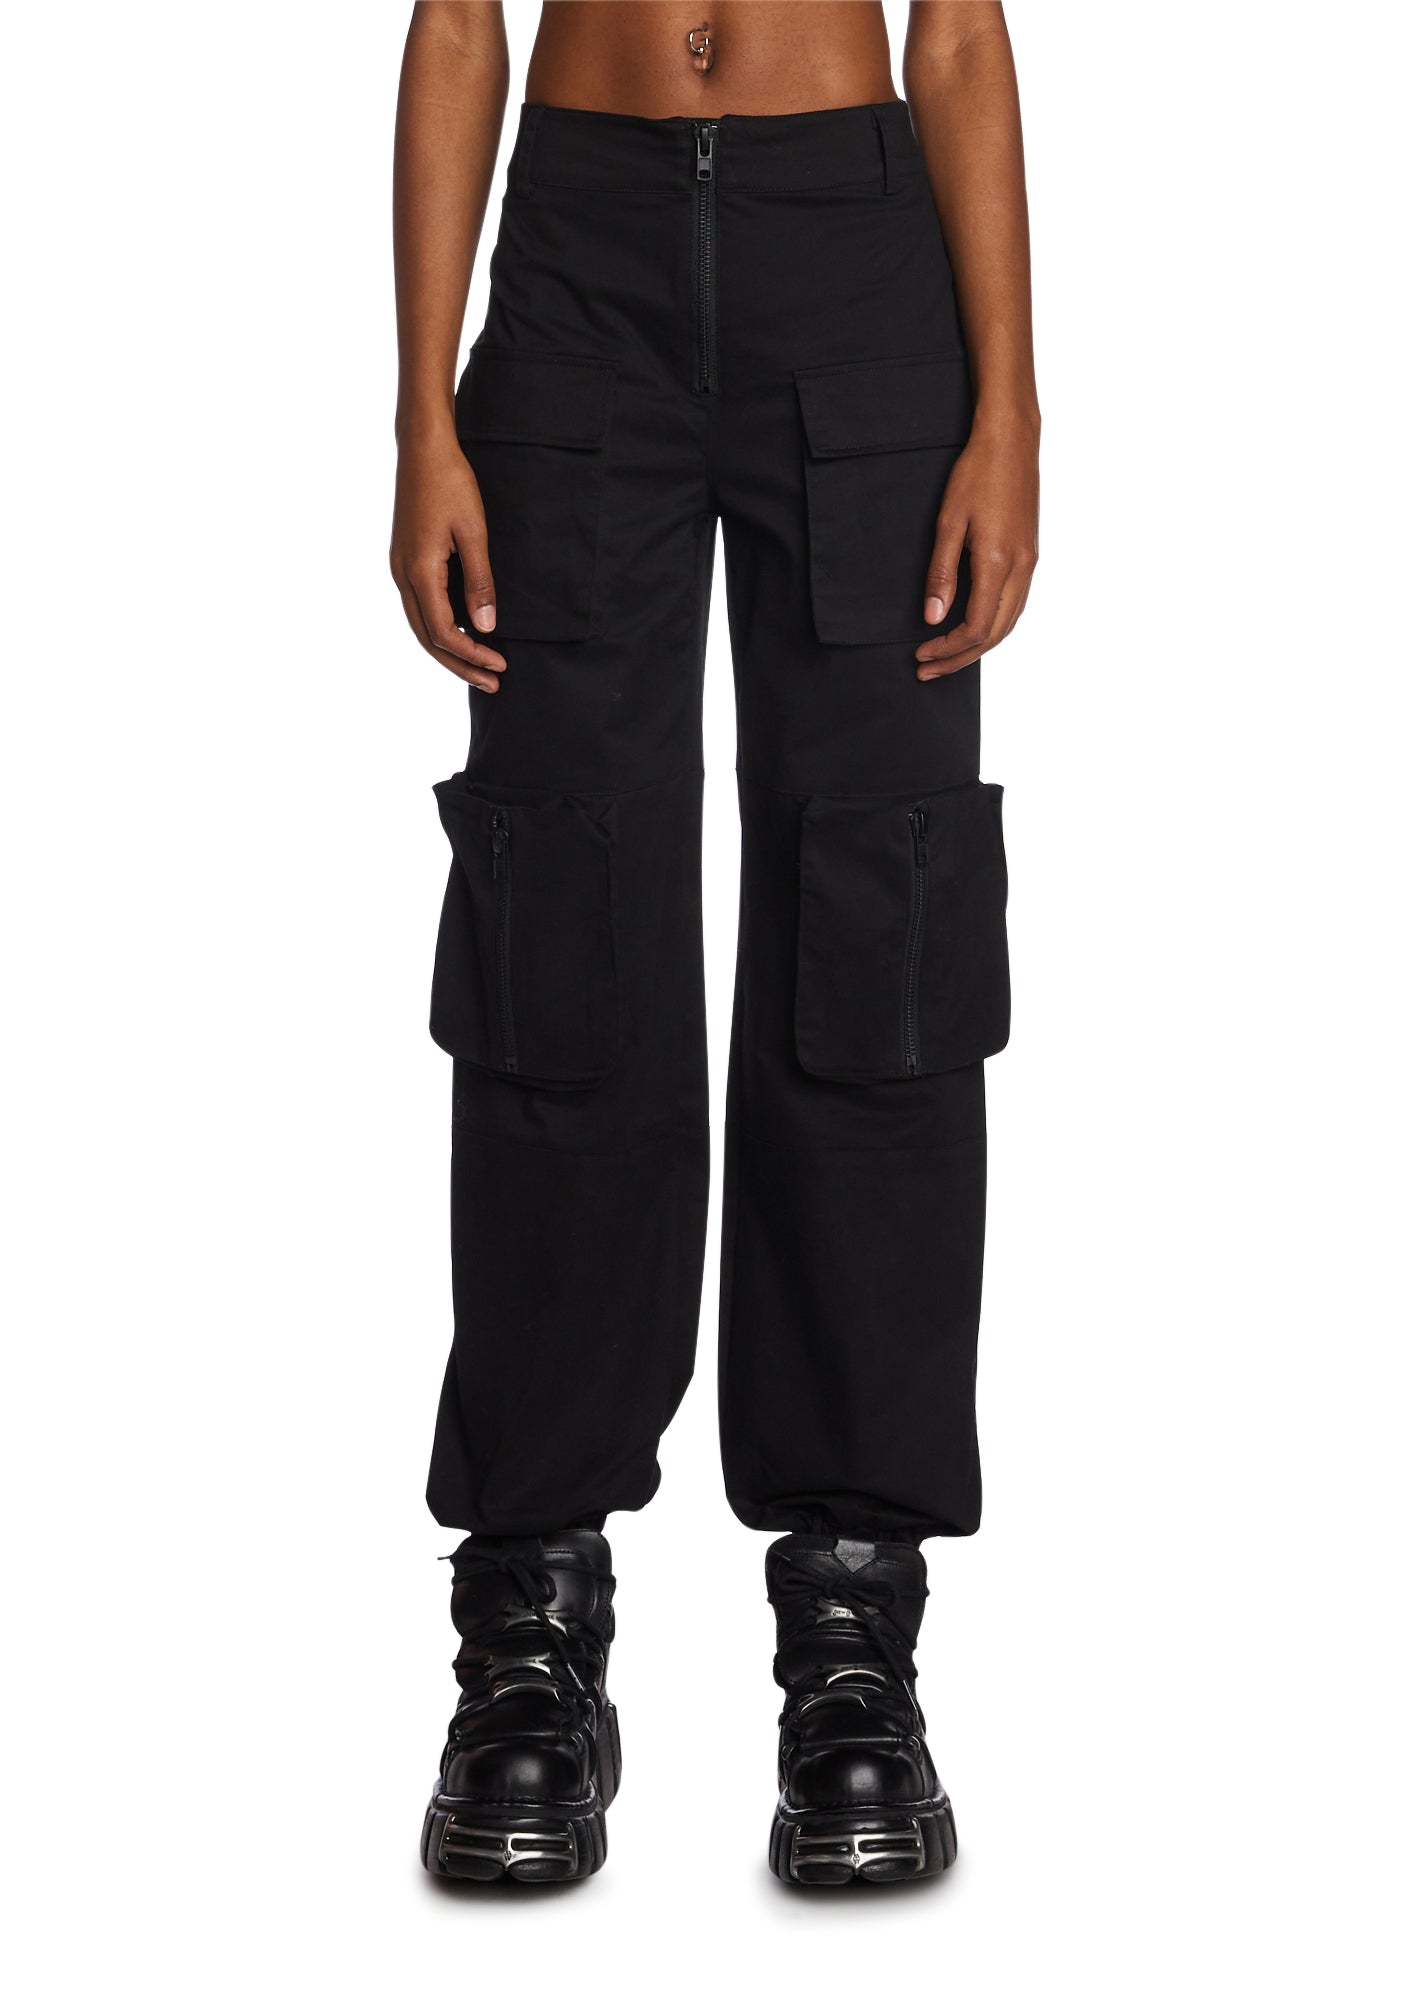 Poster Grl Multi Pocket Cargo Pants - Black | XX-Large